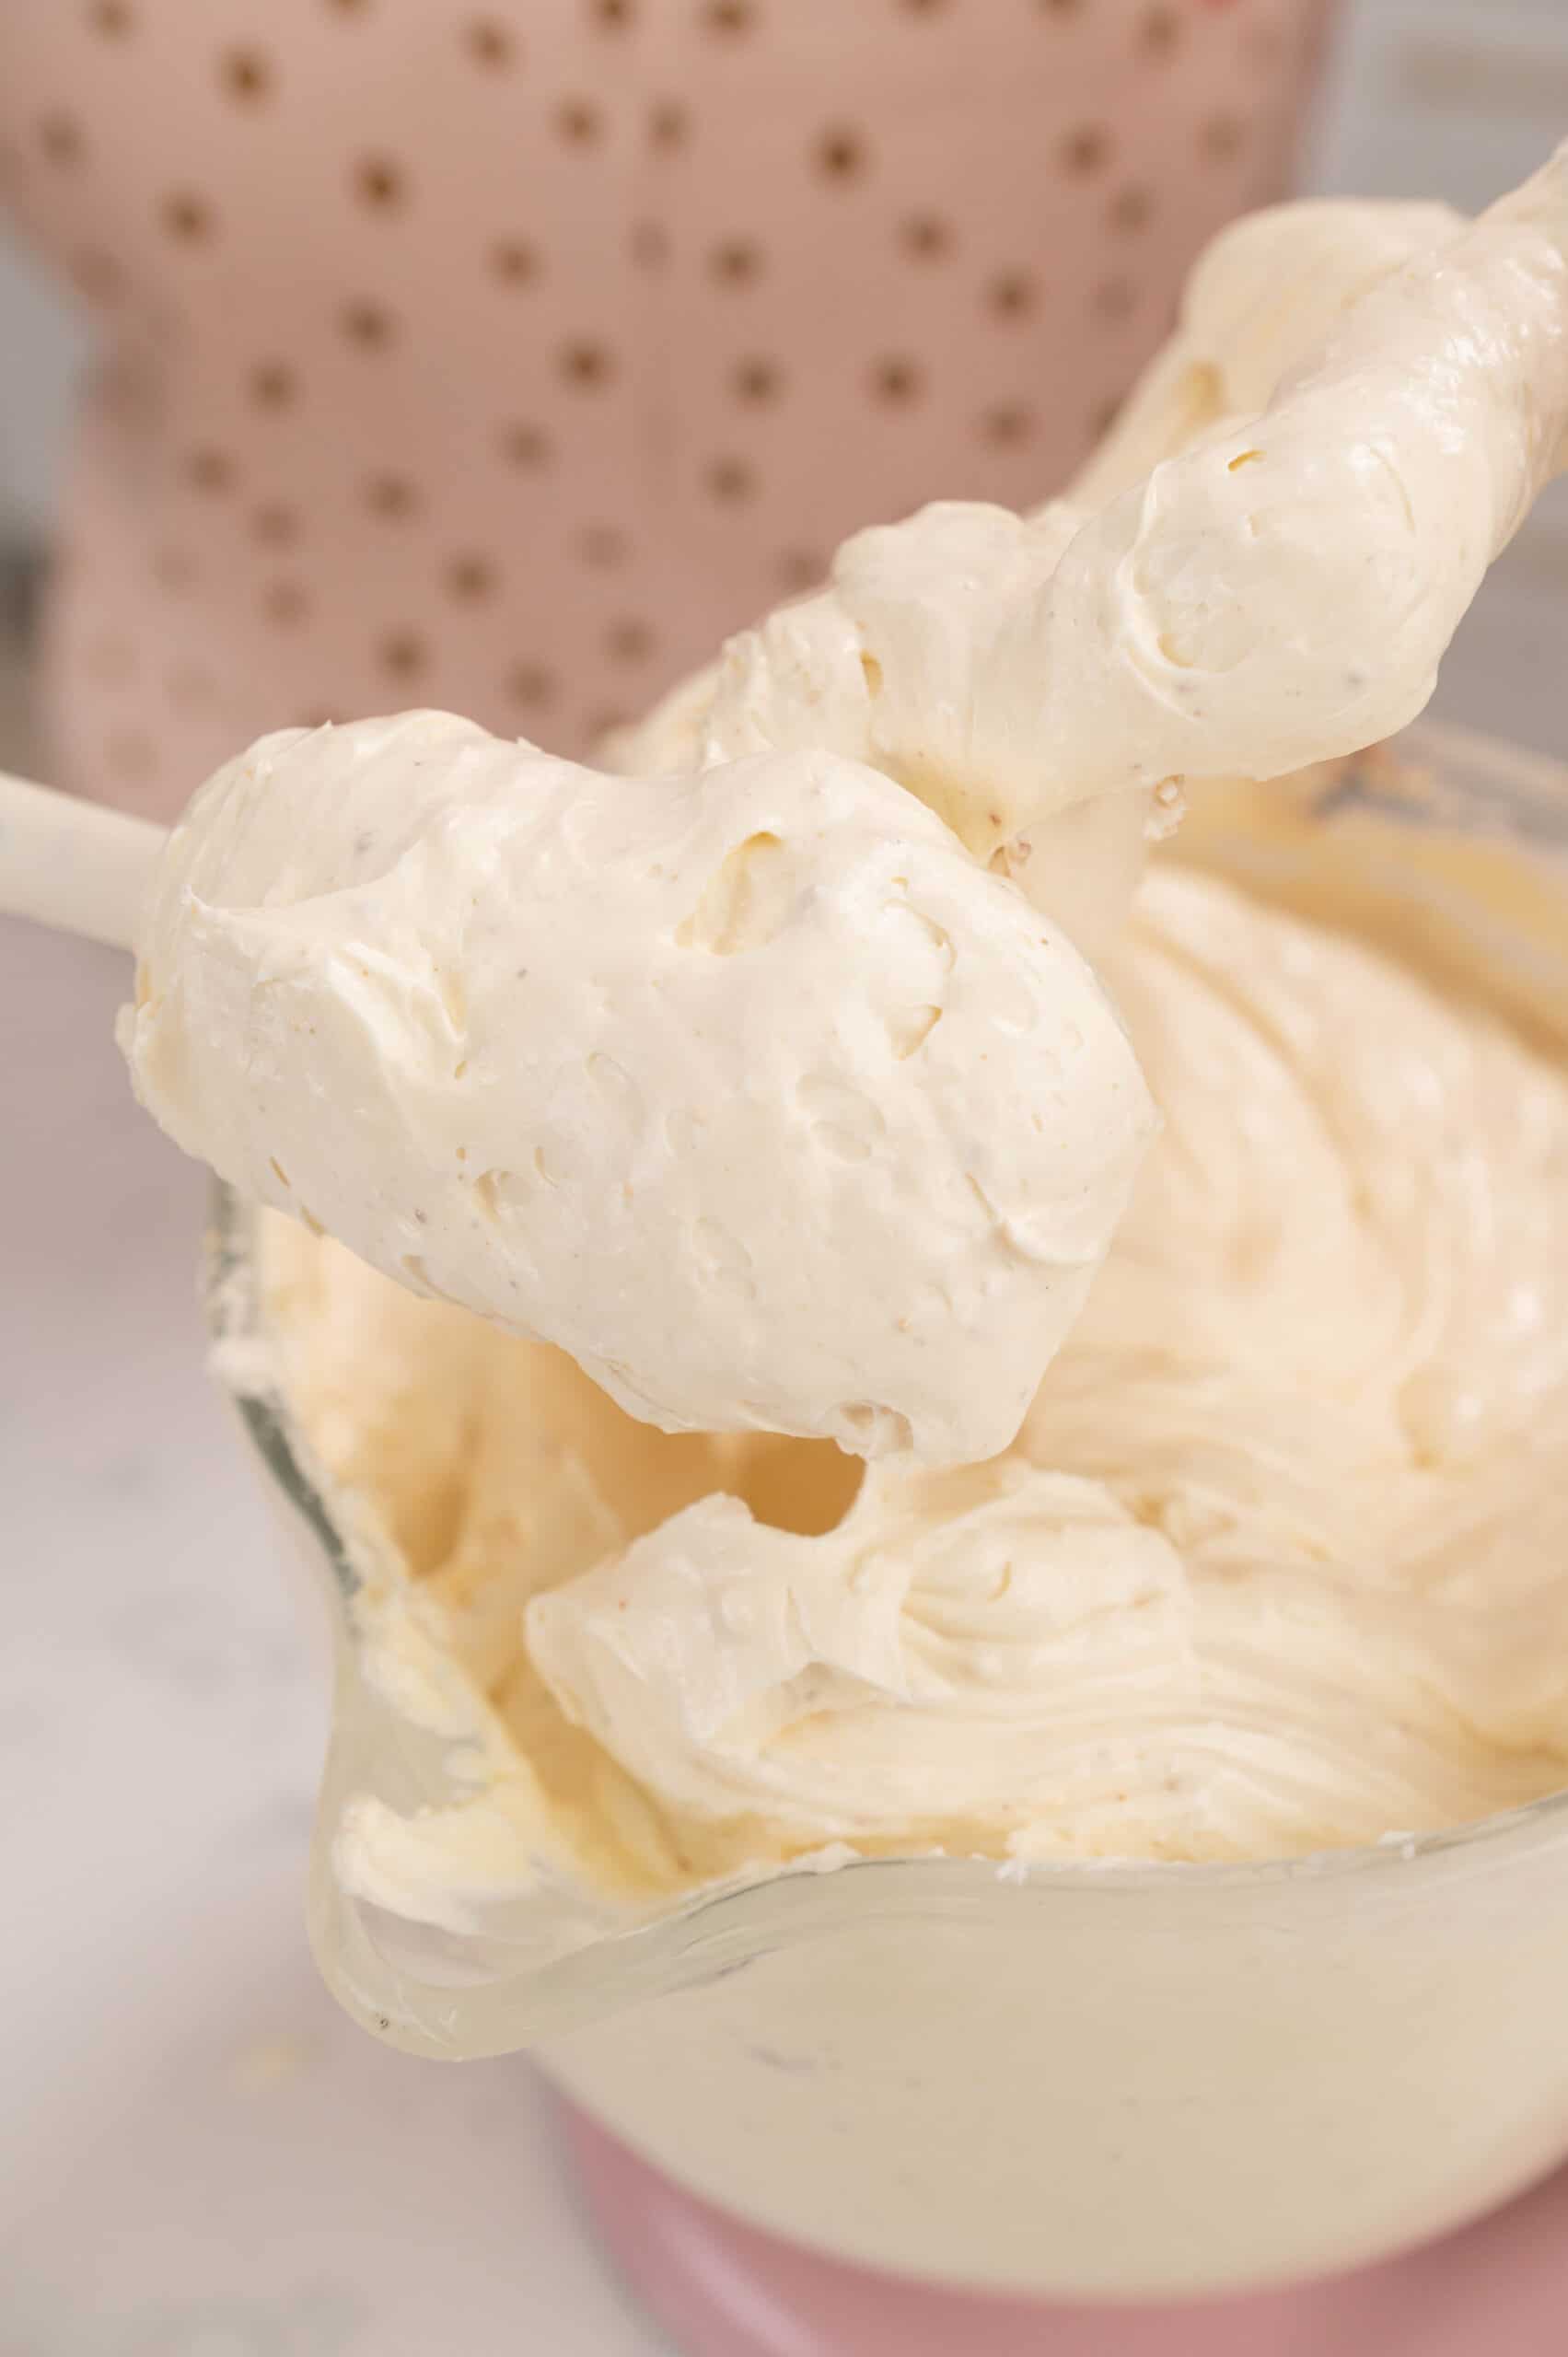 Spatula covered in marshmallow buttercream.